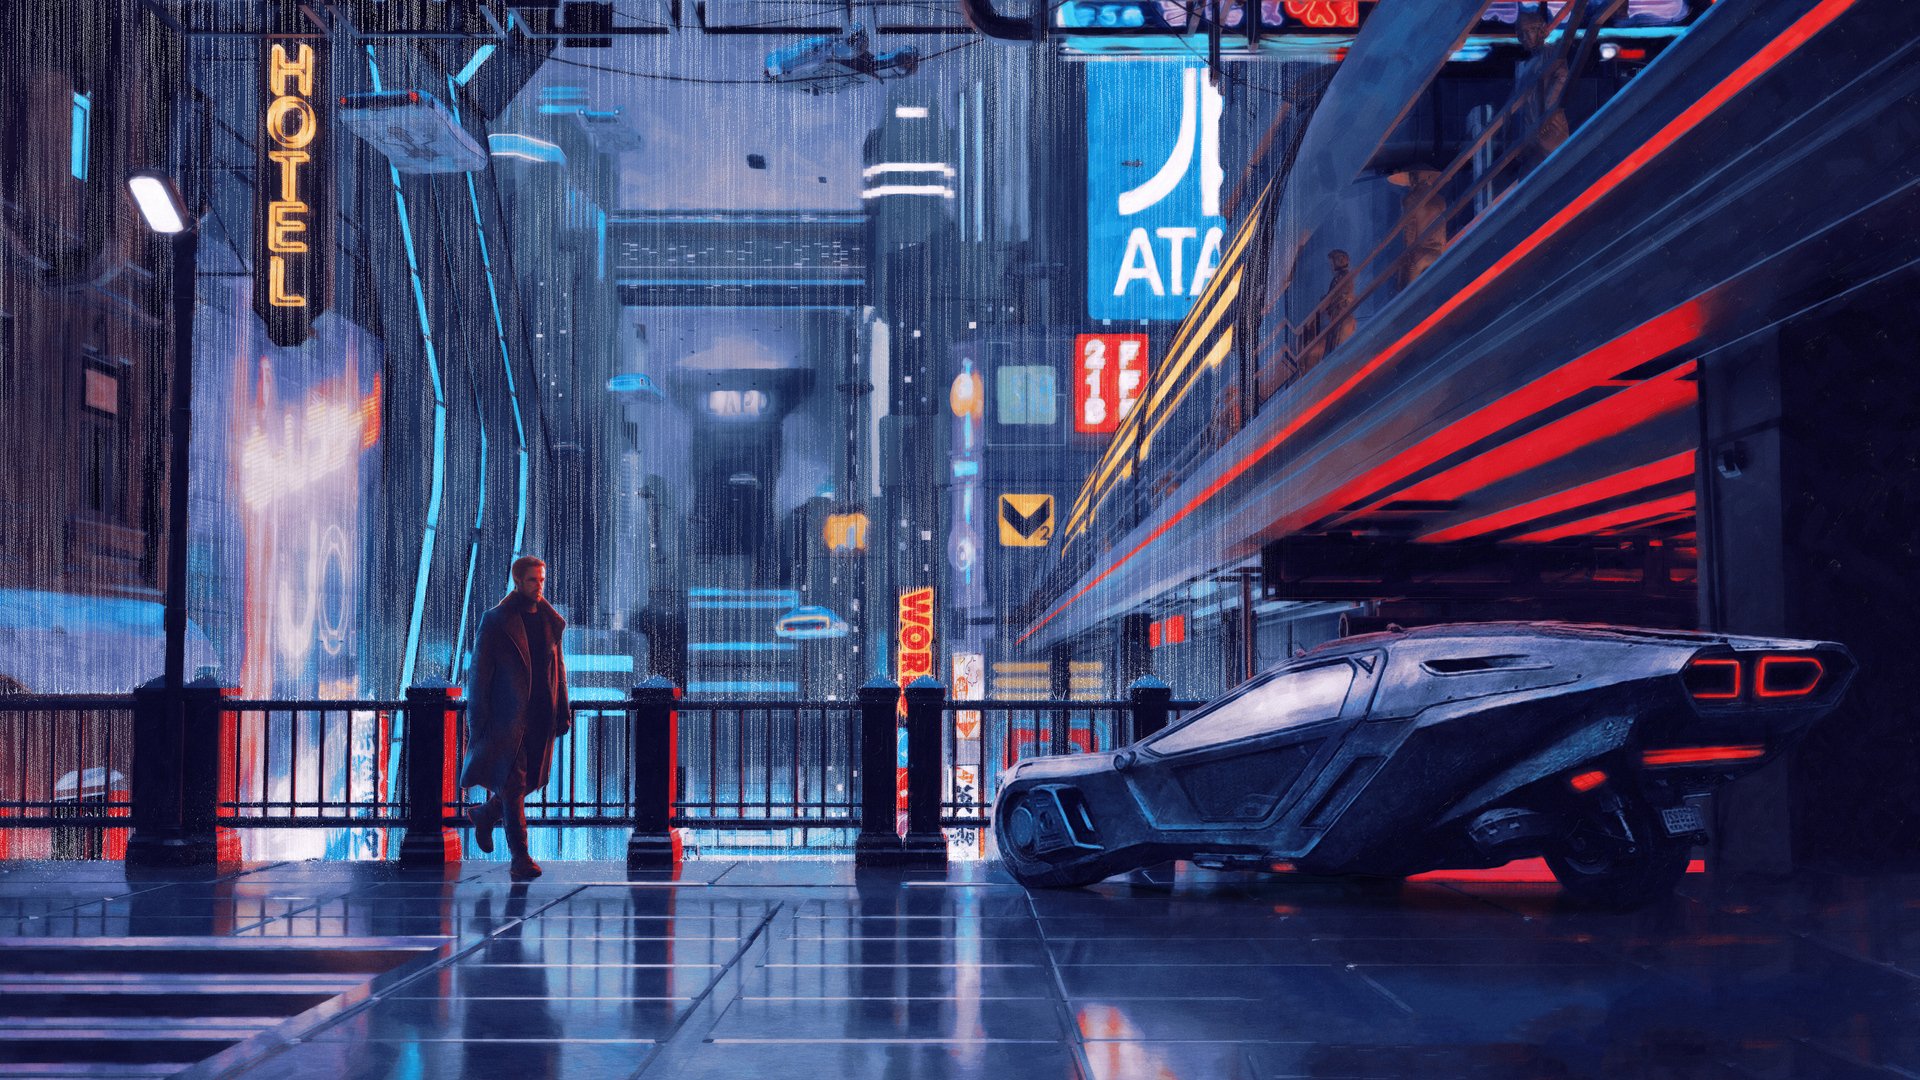 Blade Runner desktop wallpaper free download